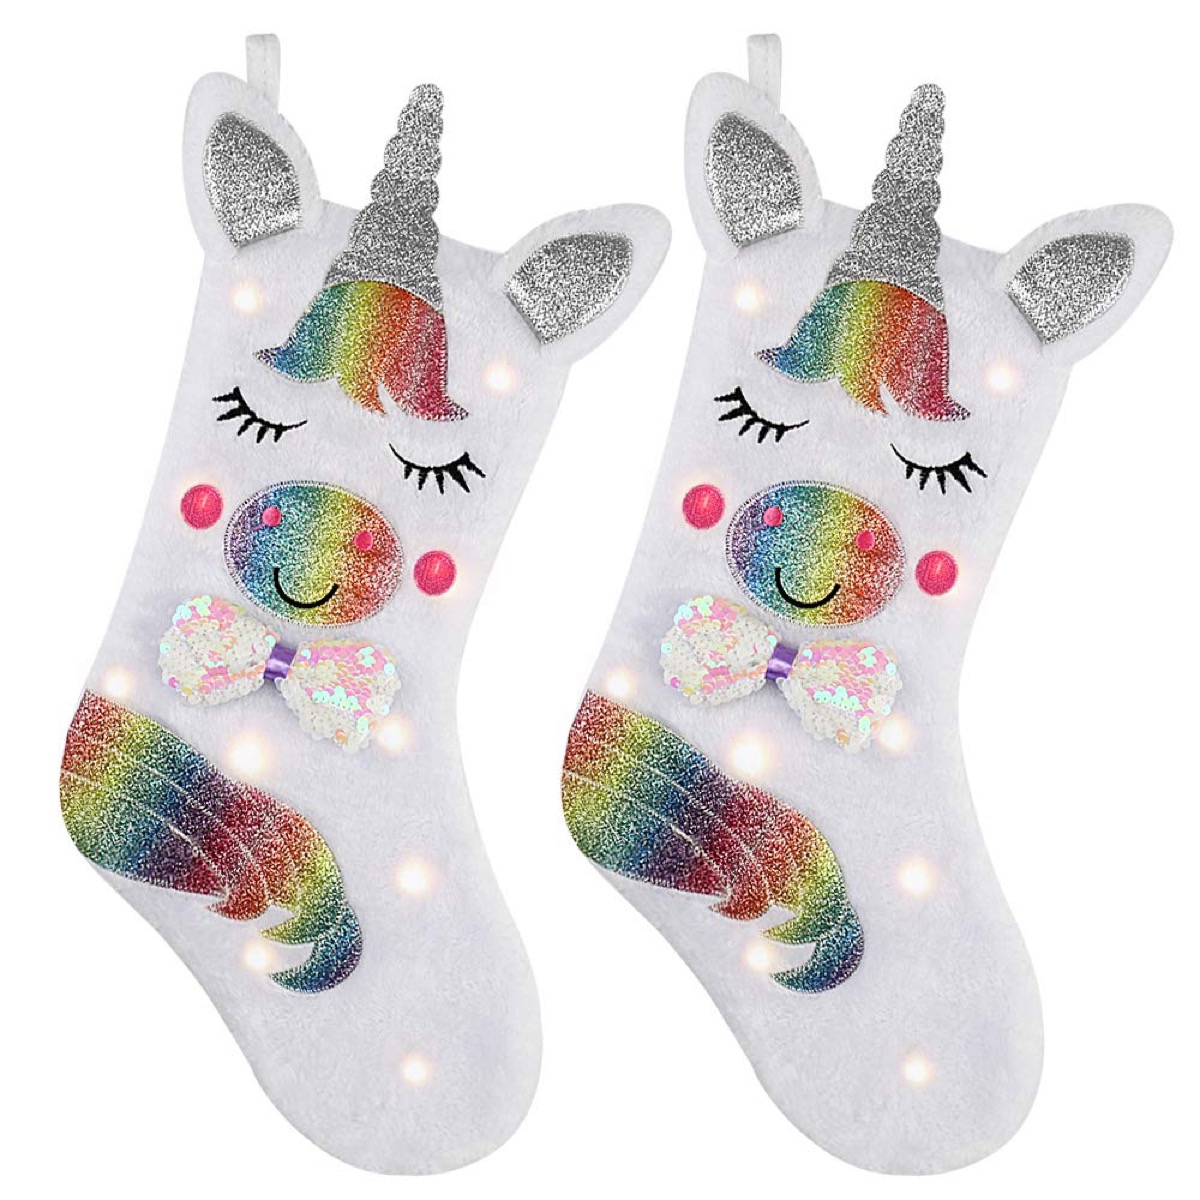 white unicorn stockings on white background